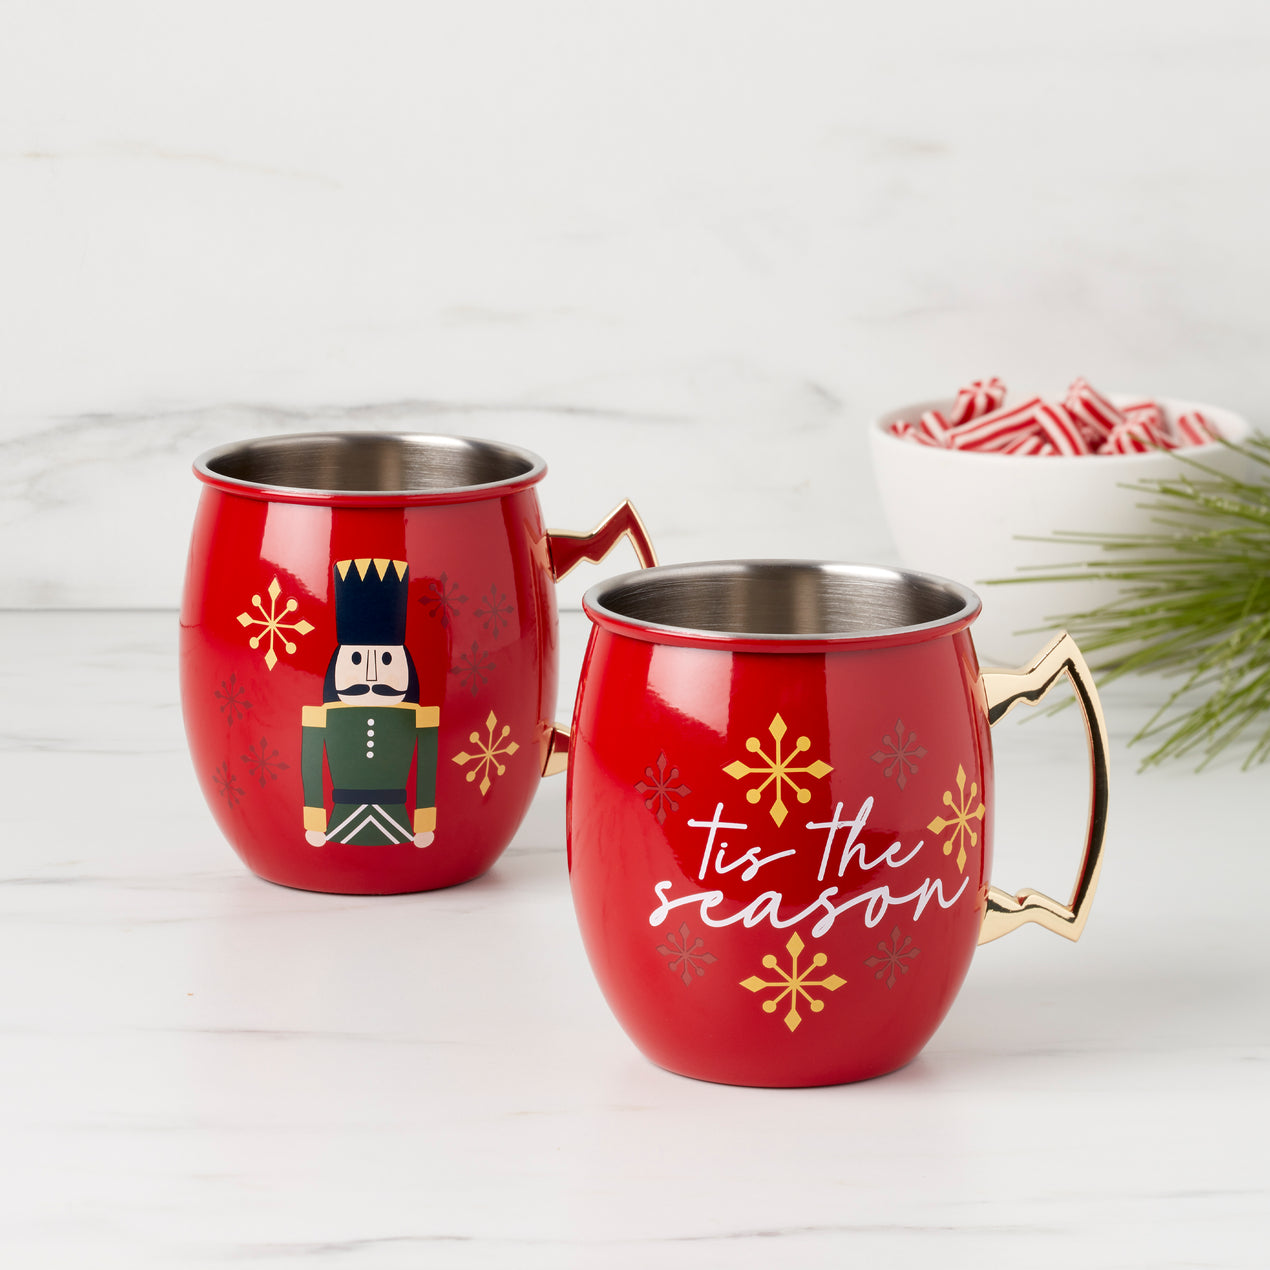 Nutcracker Christmas/Holiday Travel mug with a handle - nutcracker